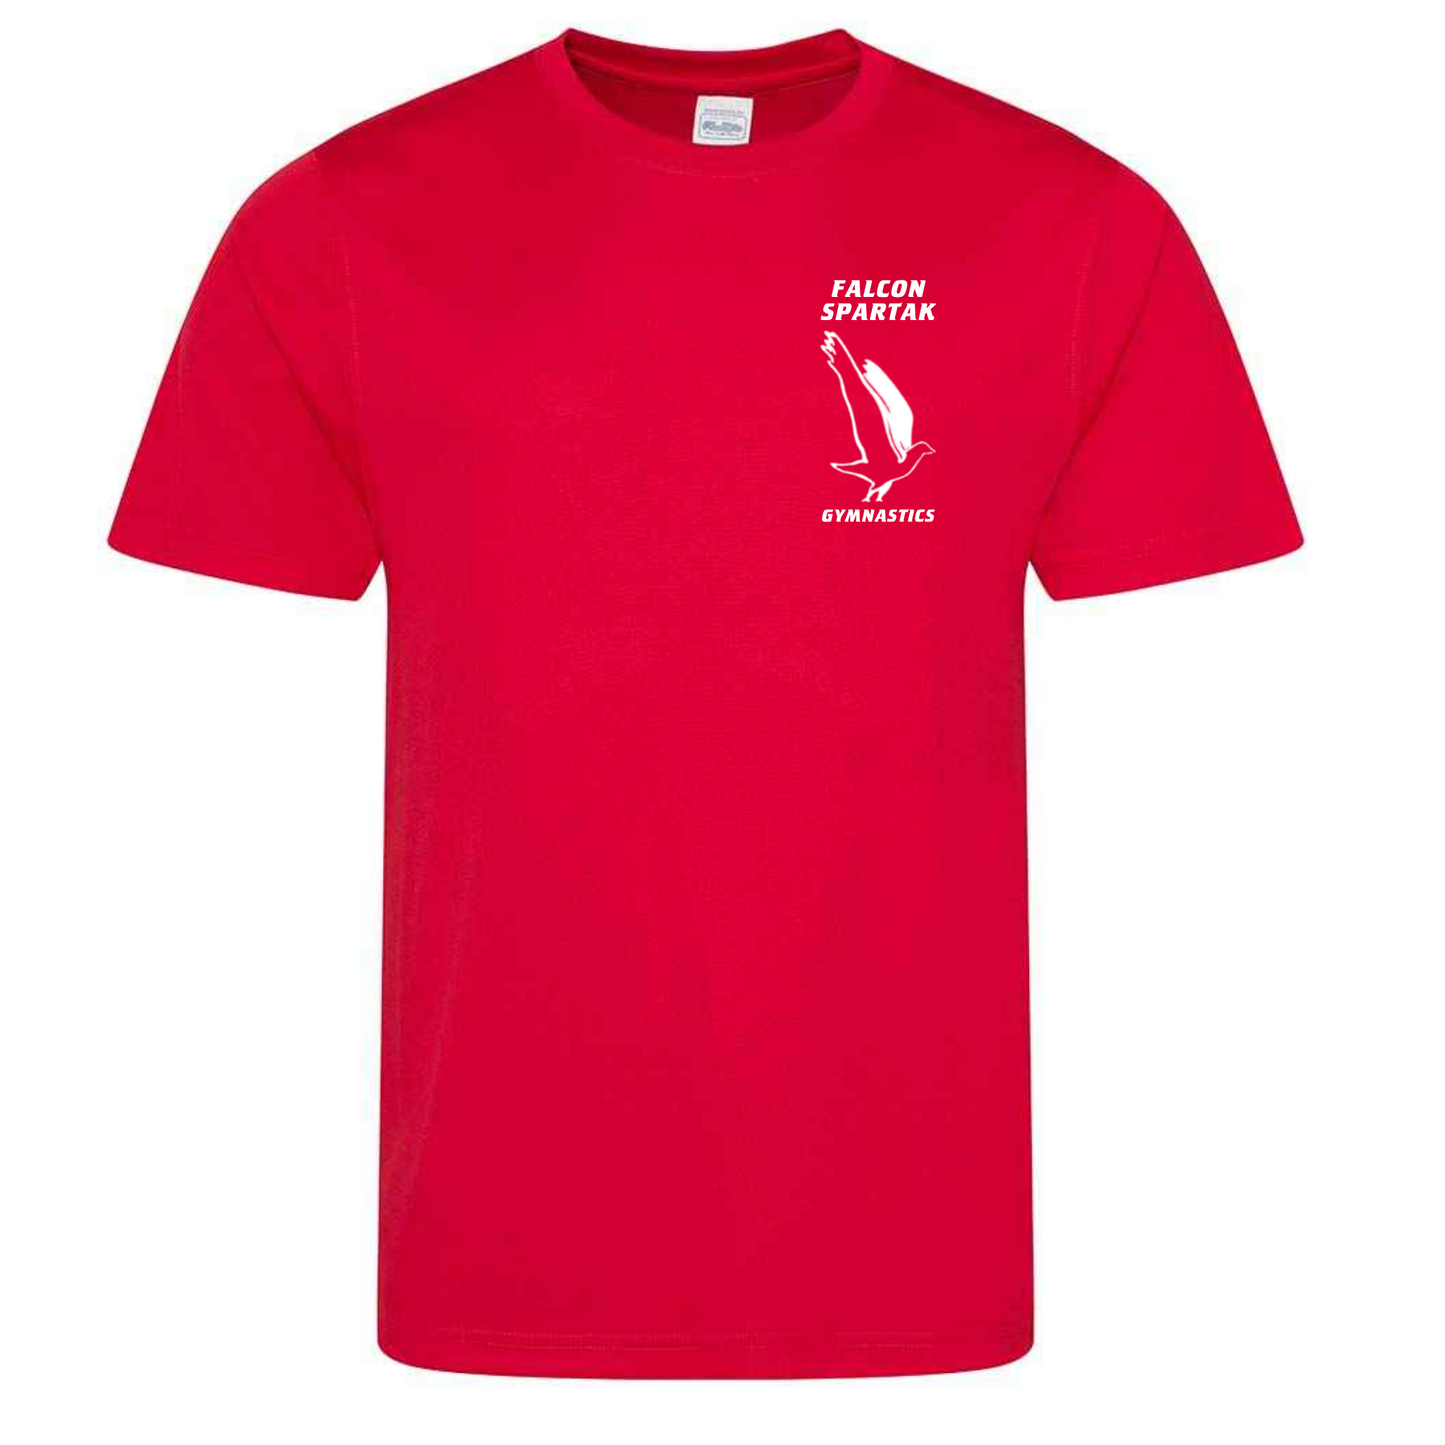 Falcon Spartak Dry-fit T-Shirt (JC001J/01/02)